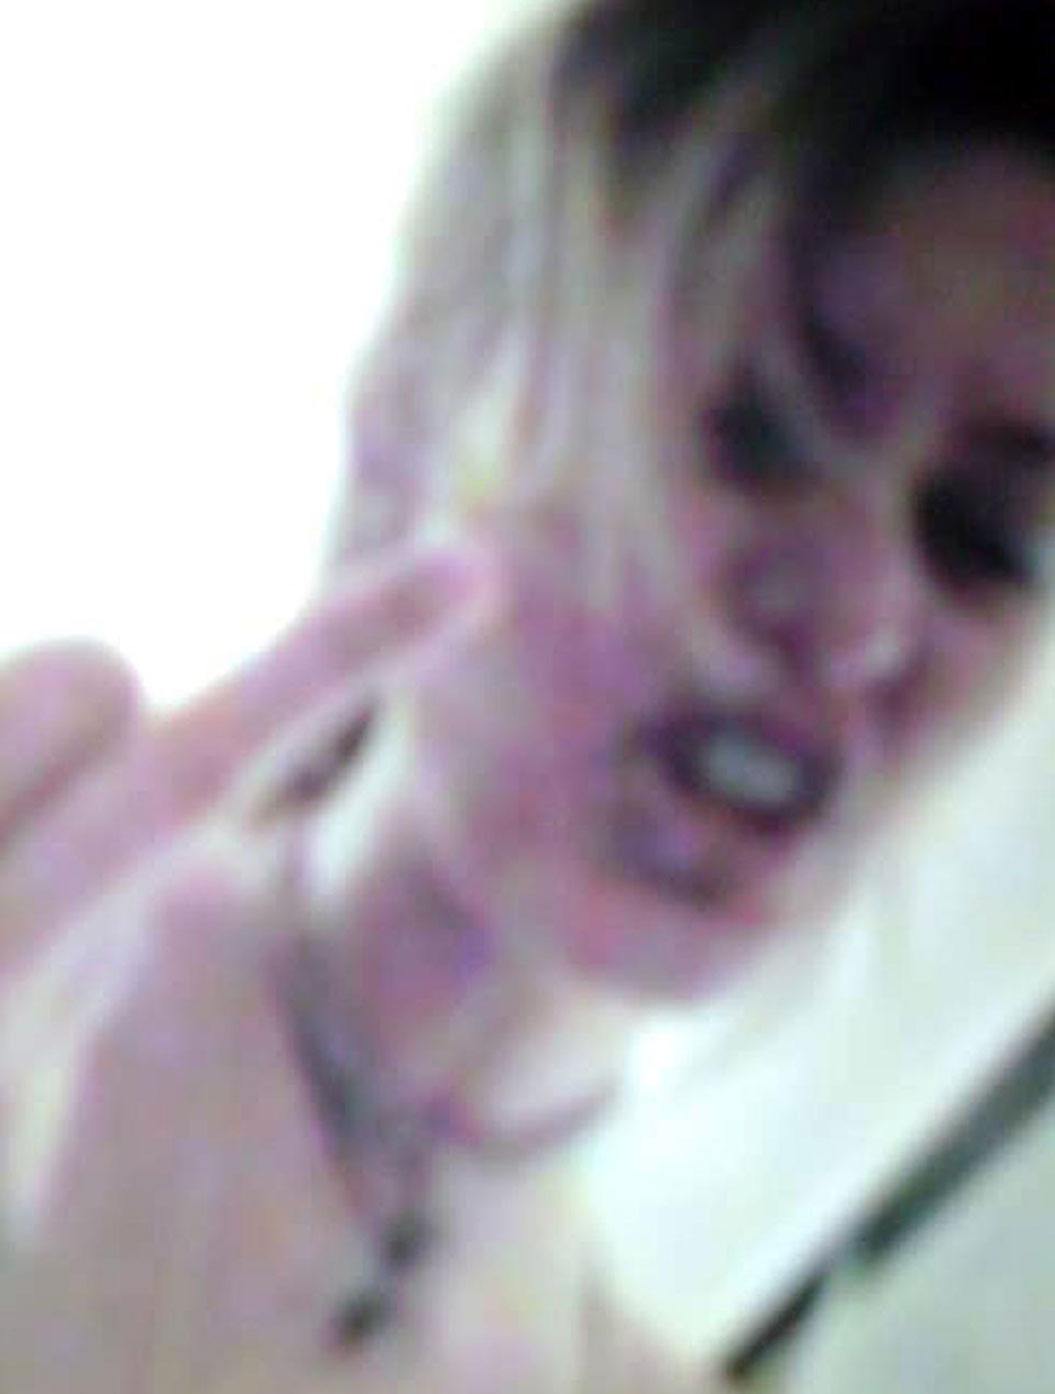 Leighton Meester Porn Video - LEAKED Sex Tape.